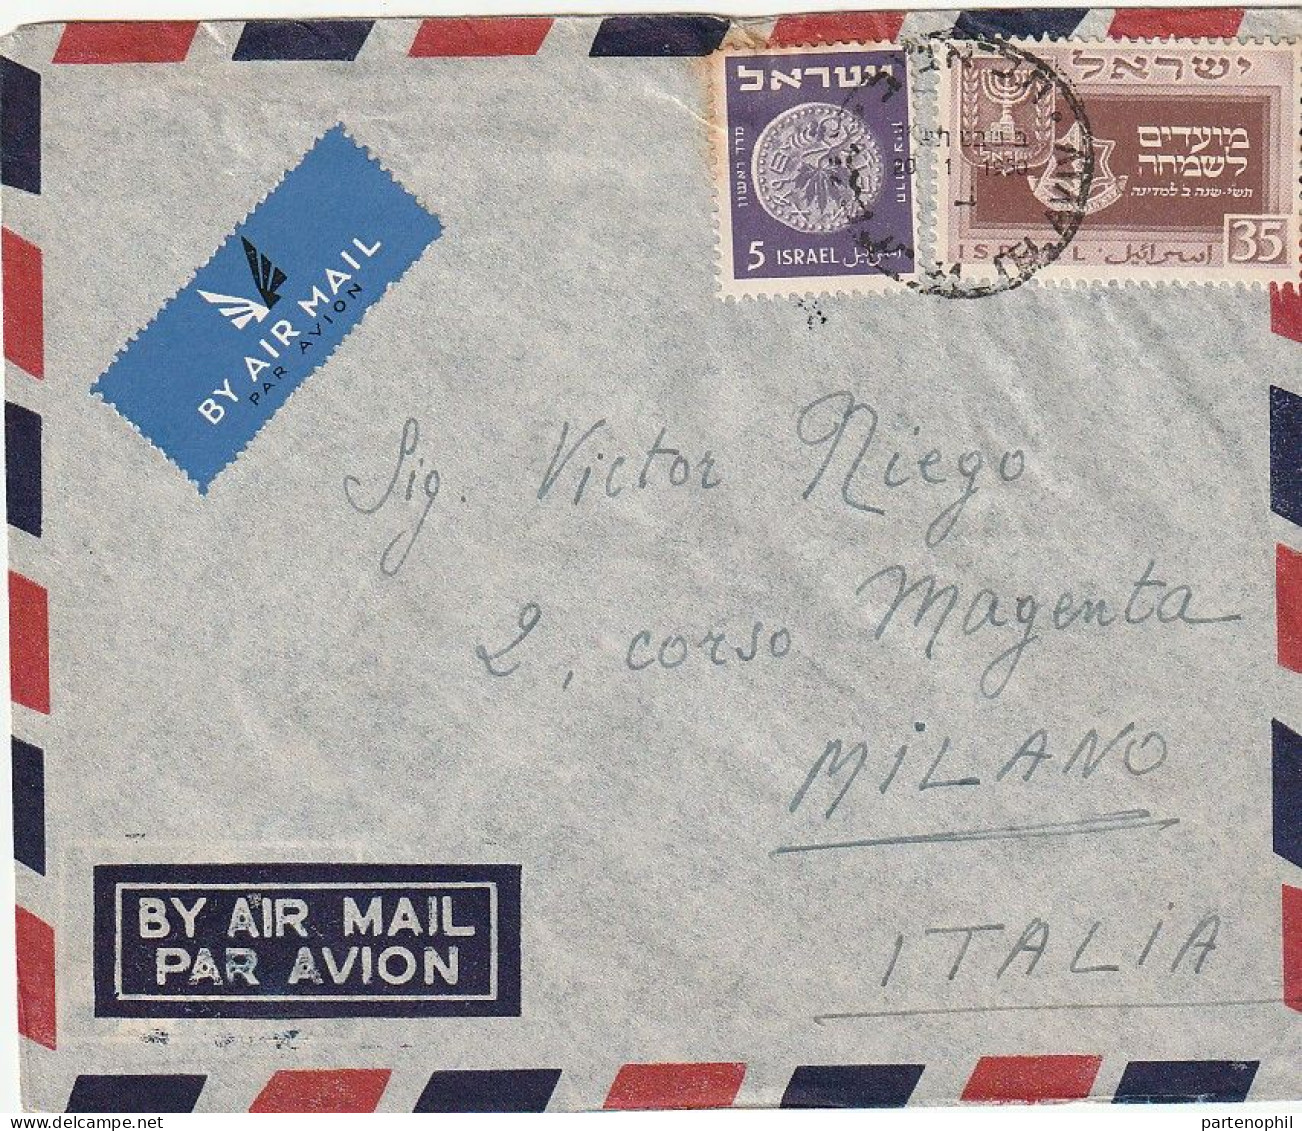 Israel 1950 -  Postgeschichte - Storia Postale - Histoire Postale - Storia Postale